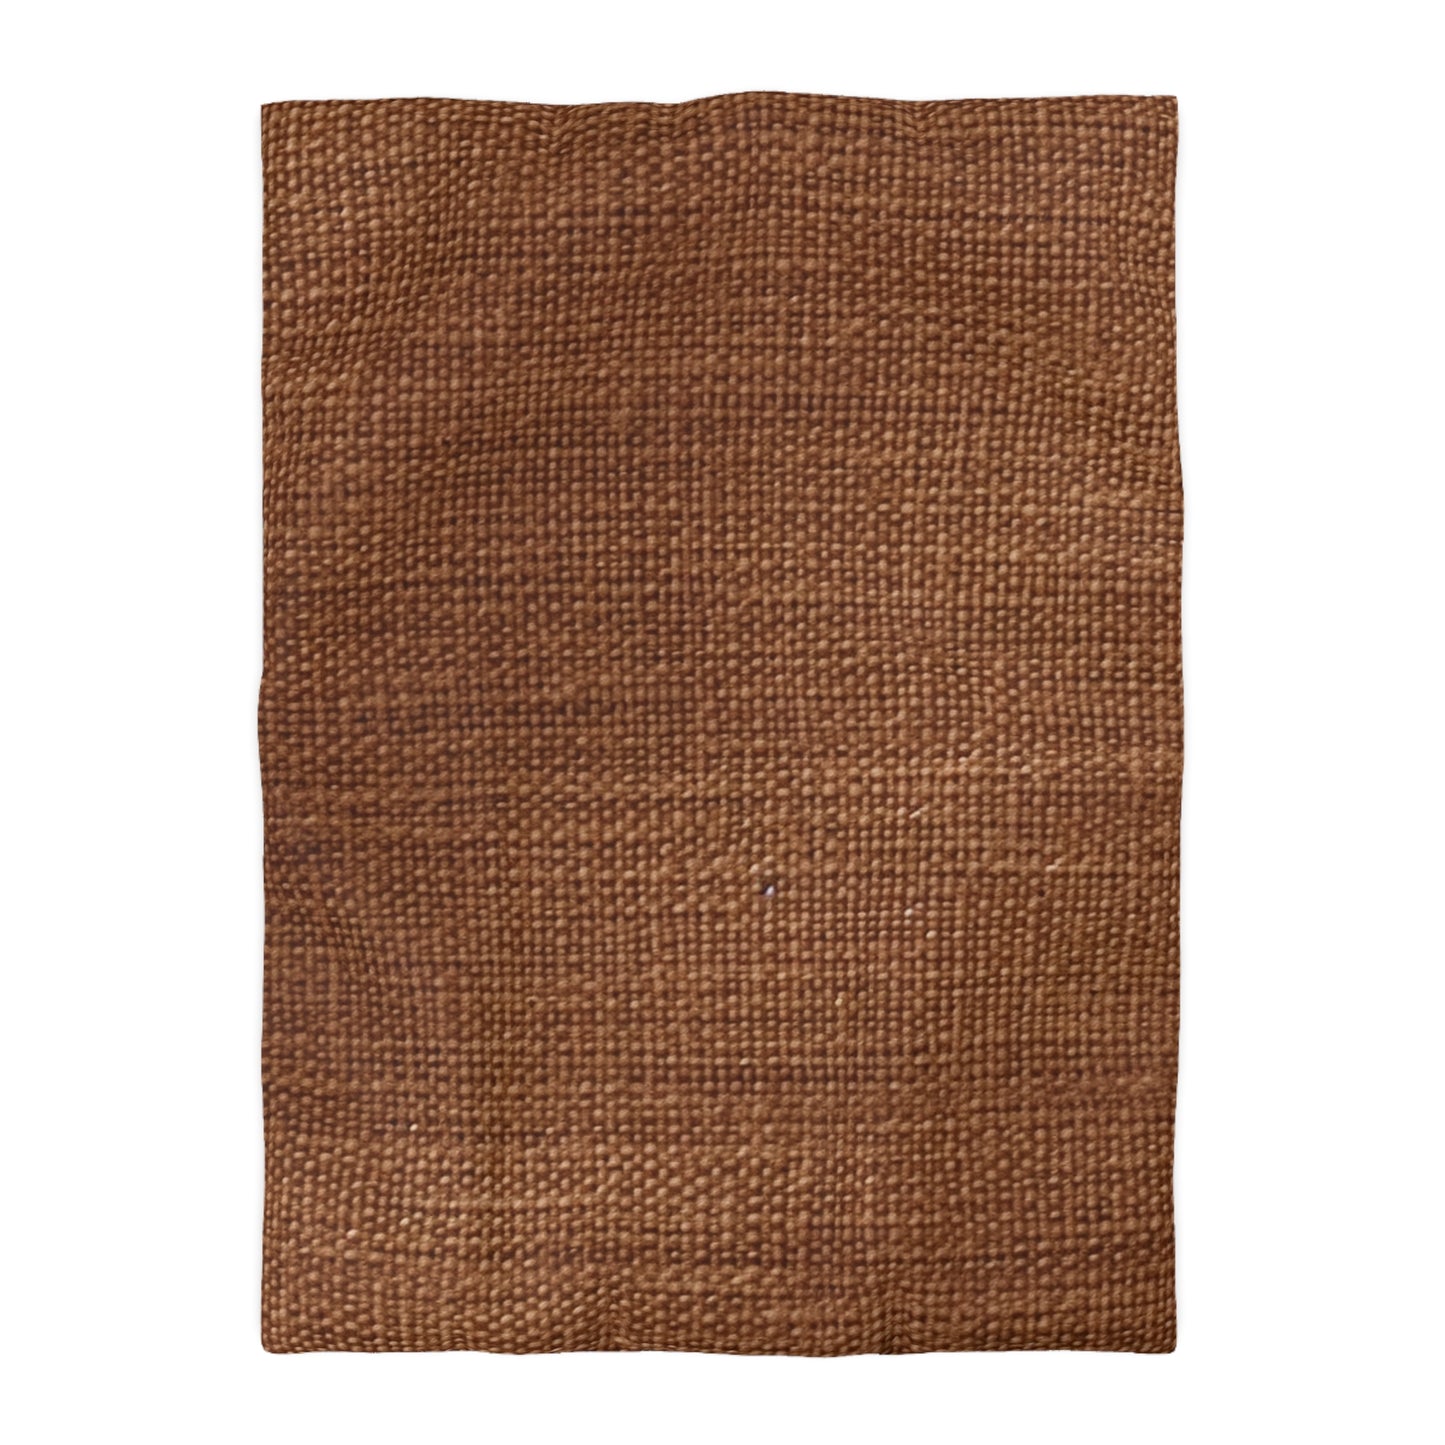 Luxe Dark Brown: Denim-Inspired, Distinctively Textured Fabric - Microfiber Duvet Cover